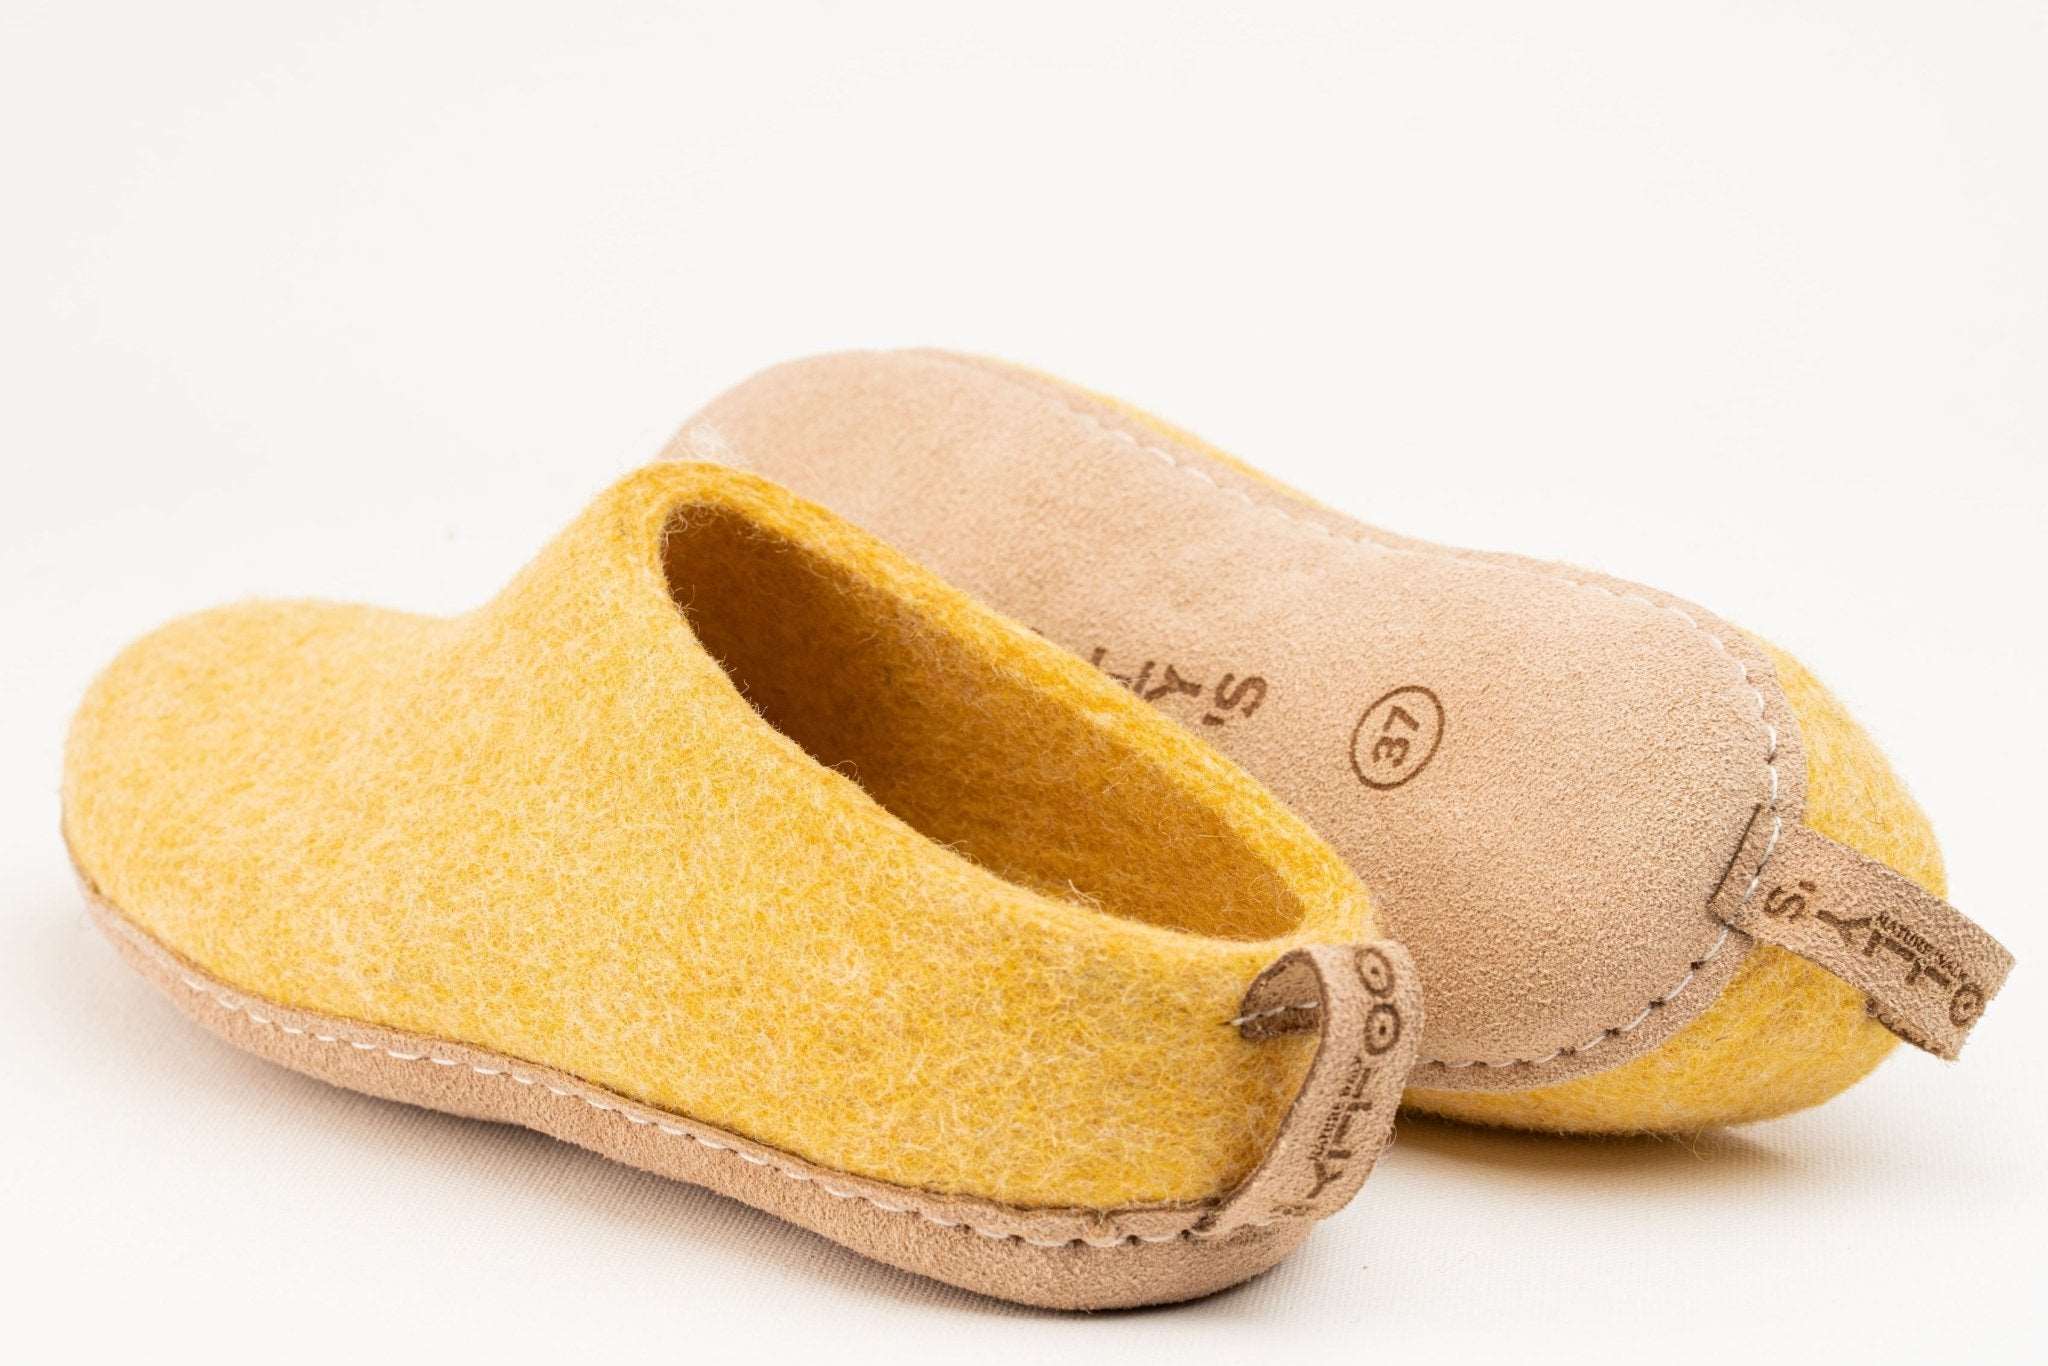 Indoor Open Heel Slippers With Leather Sole - Mustard - Woollyes